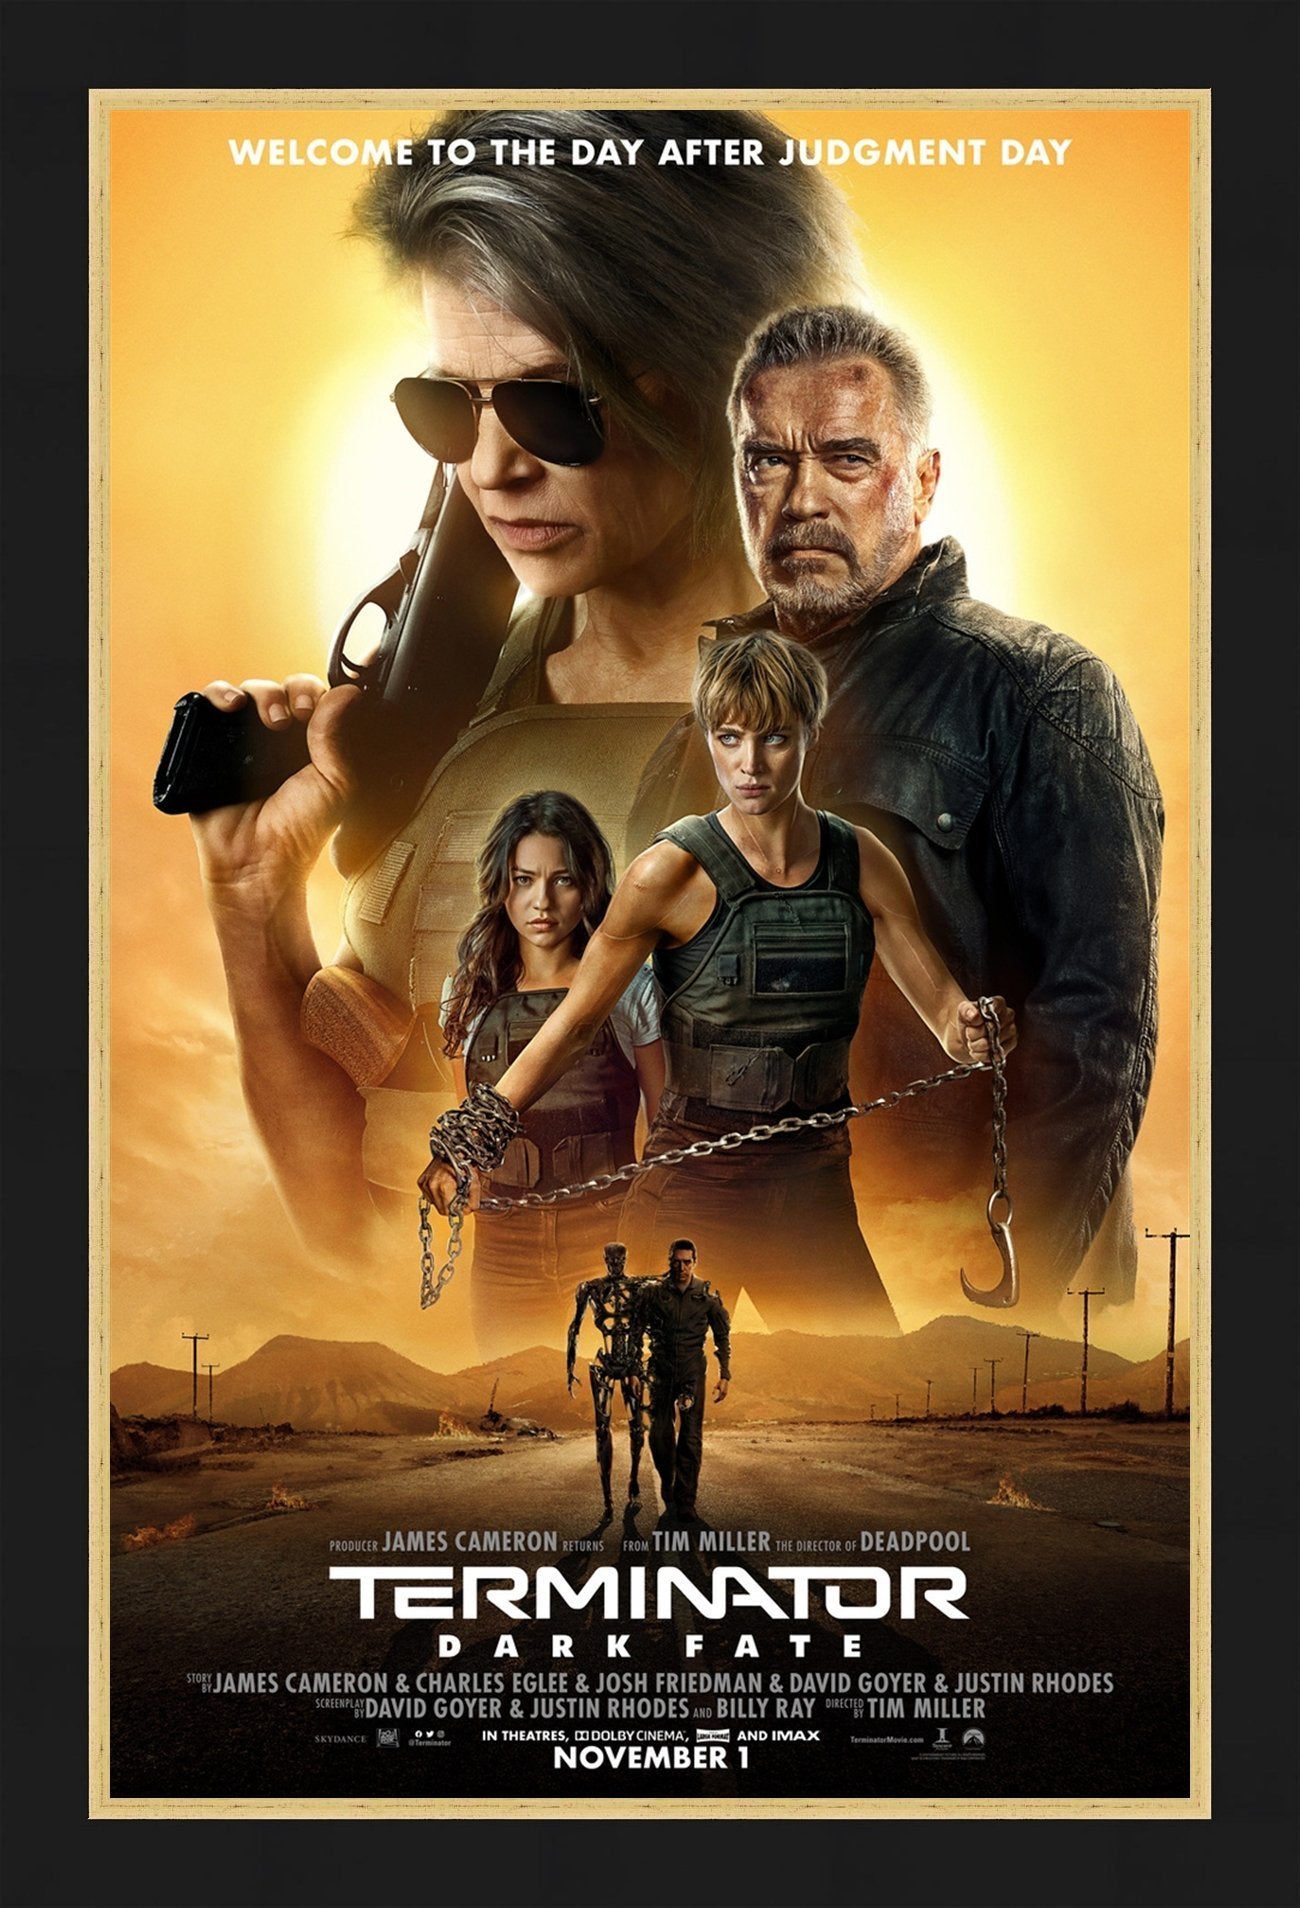 An original movie poster for the film Terminator: Dark Fate